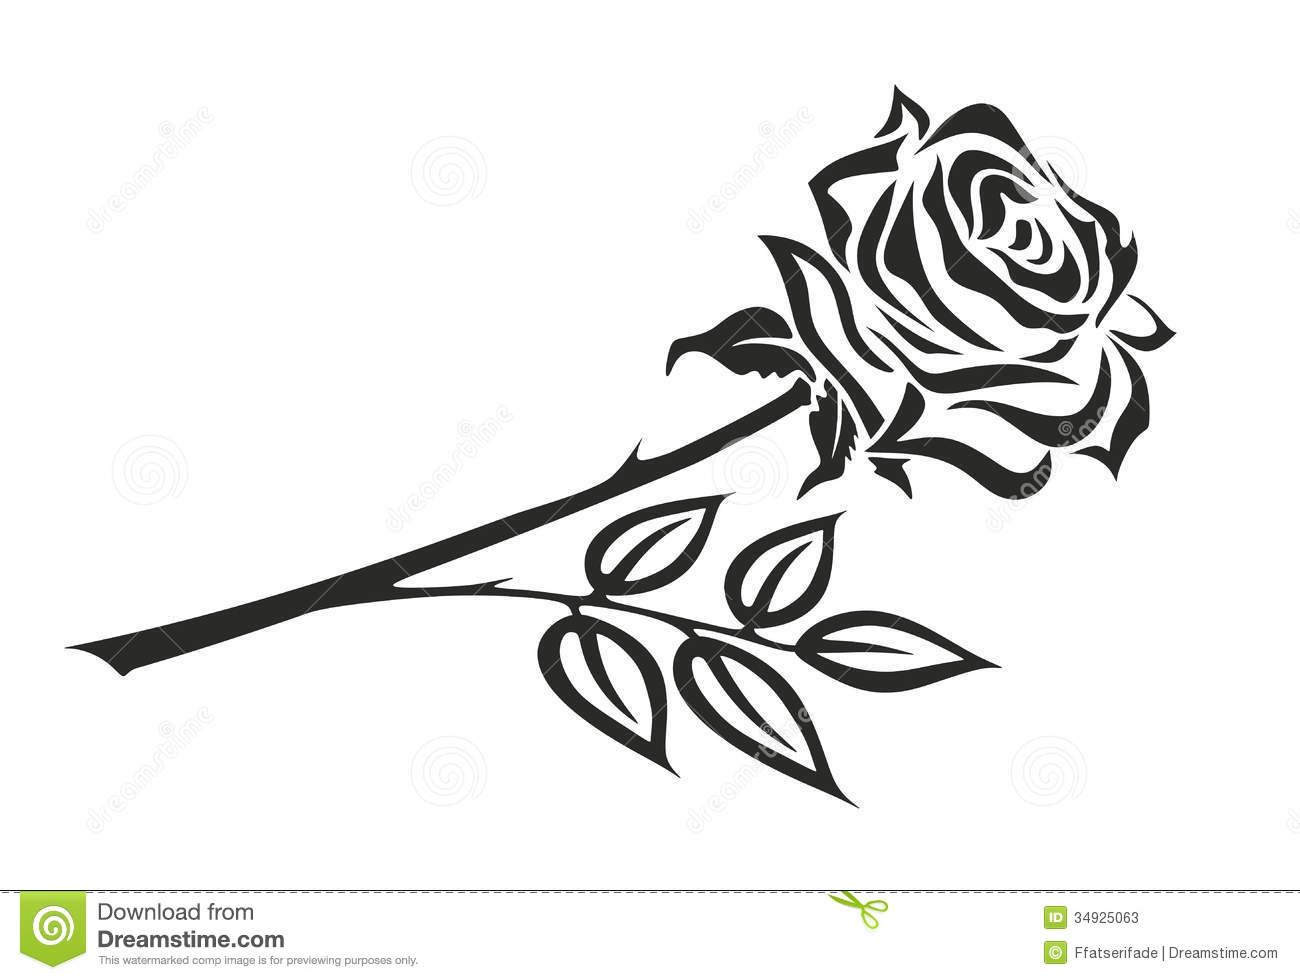 Rose black and white black an